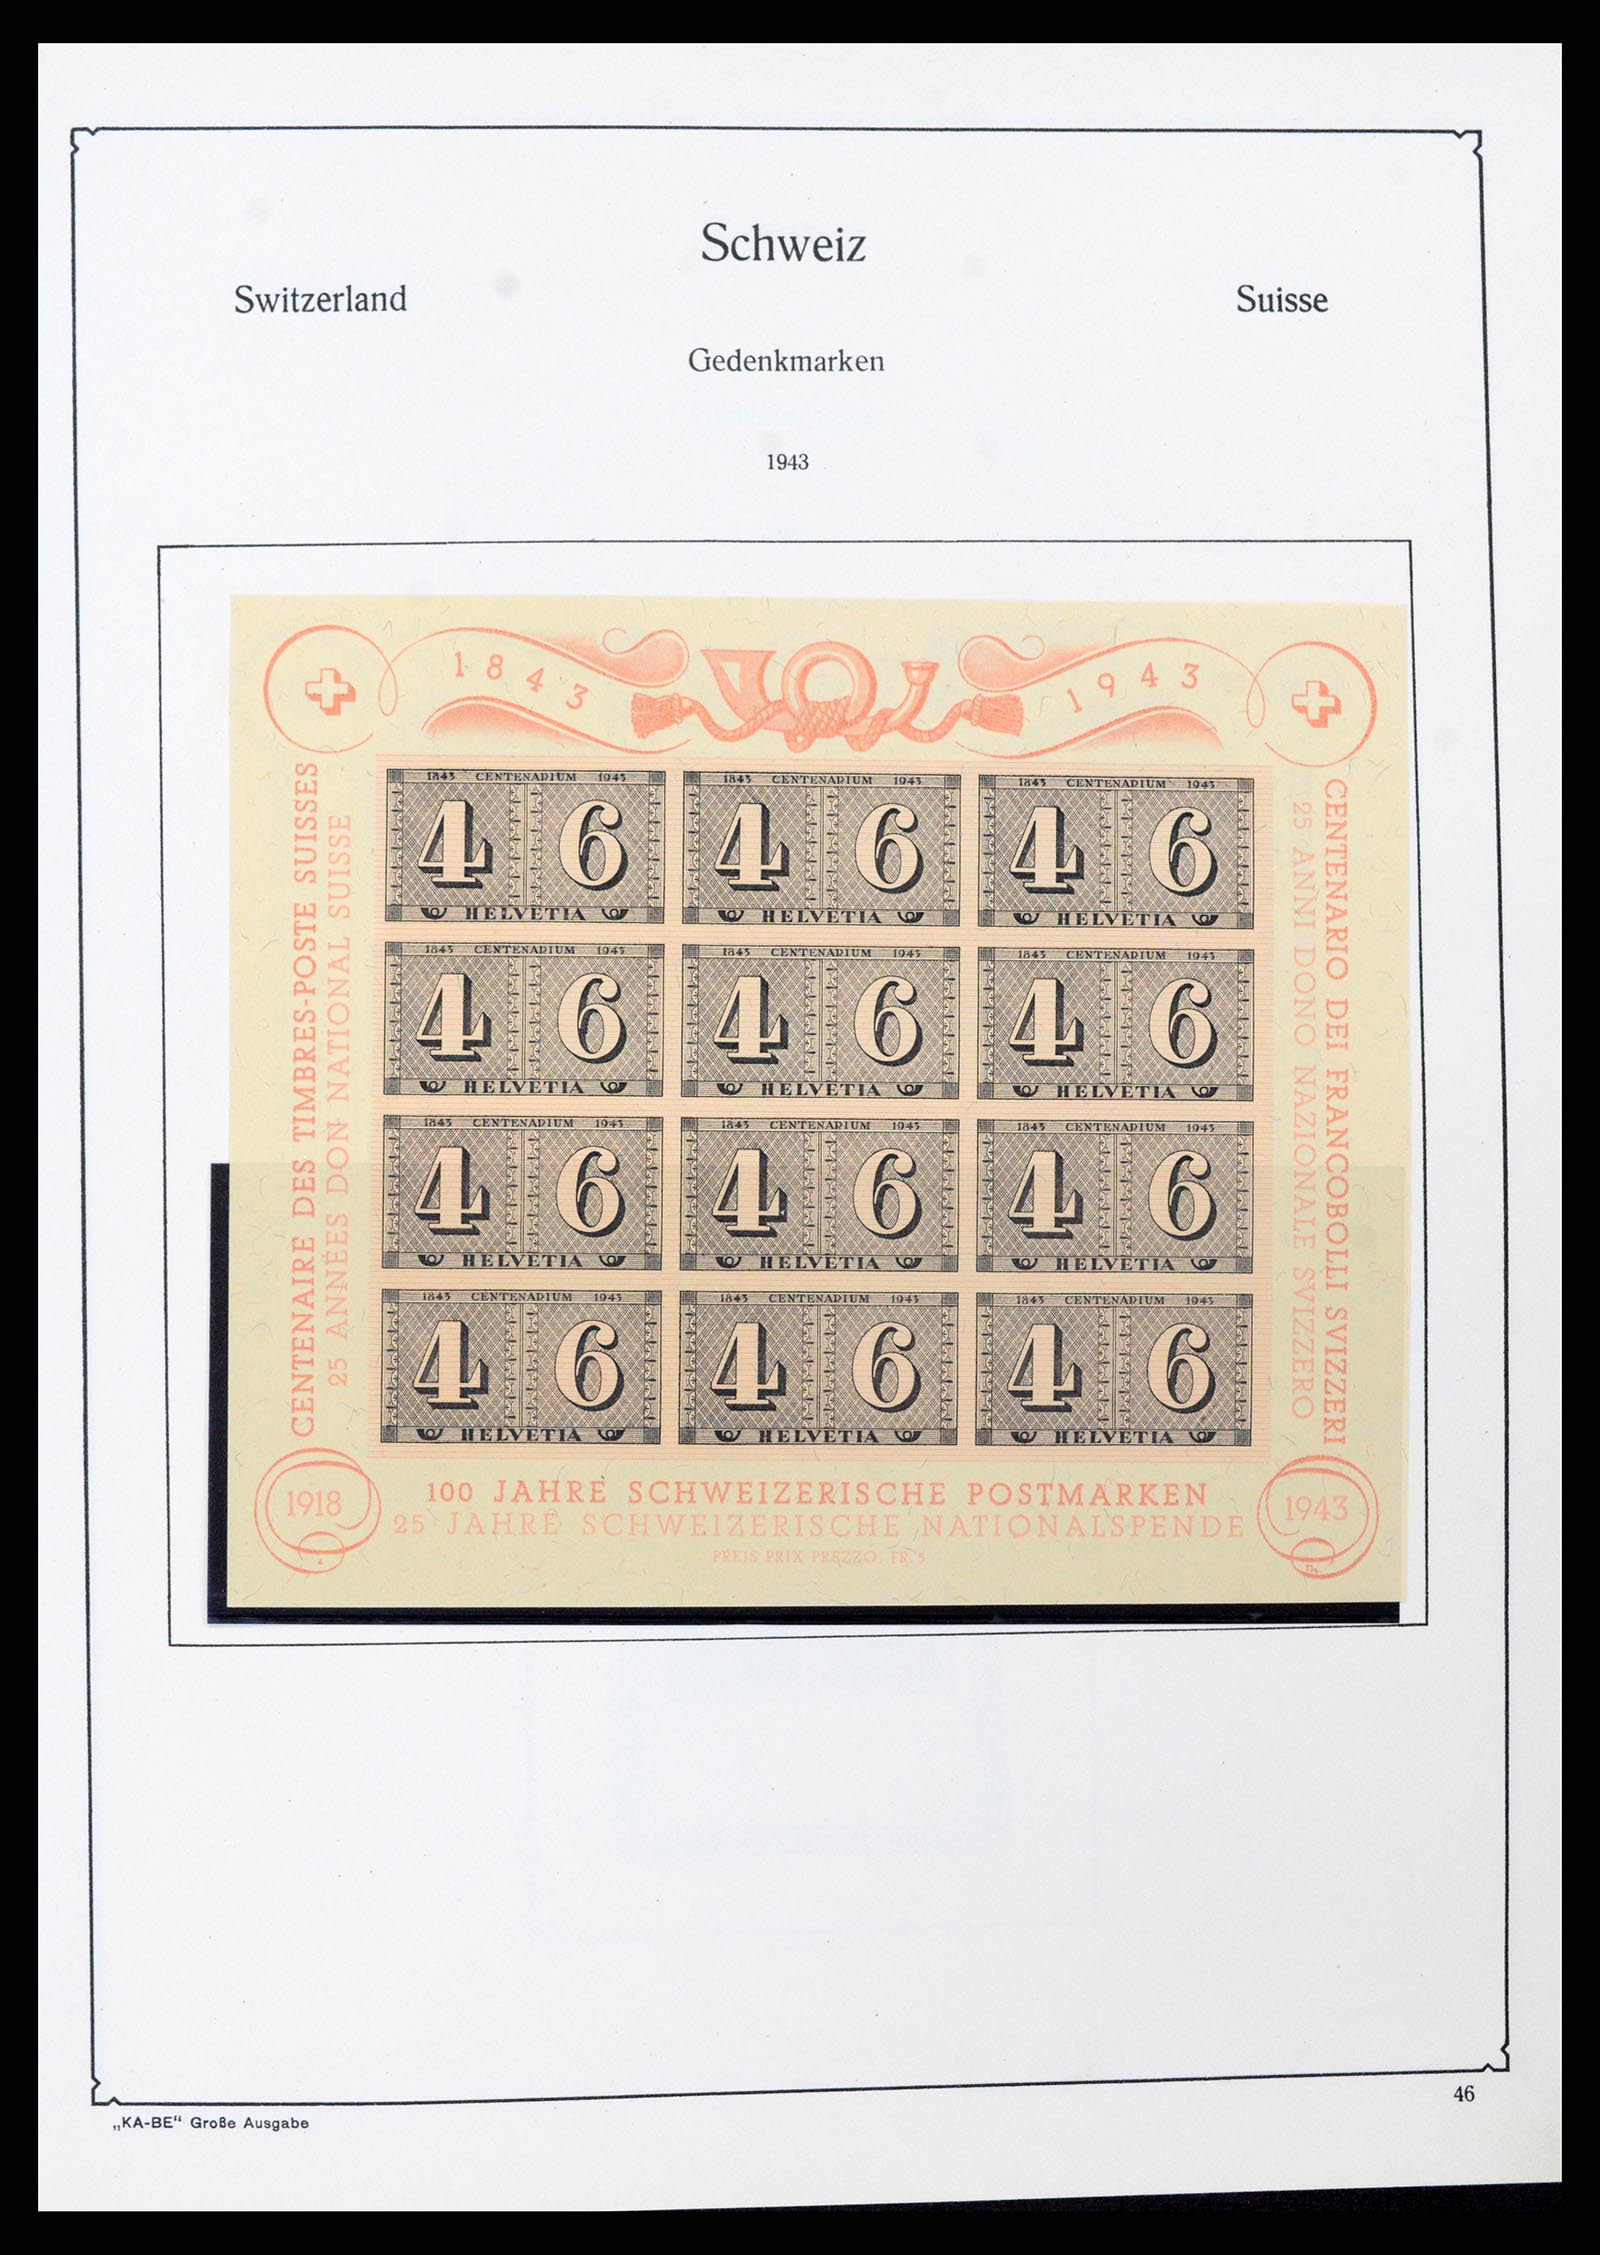 37588 044 - Stamp collection 37588 Switzerland 1854-1974.